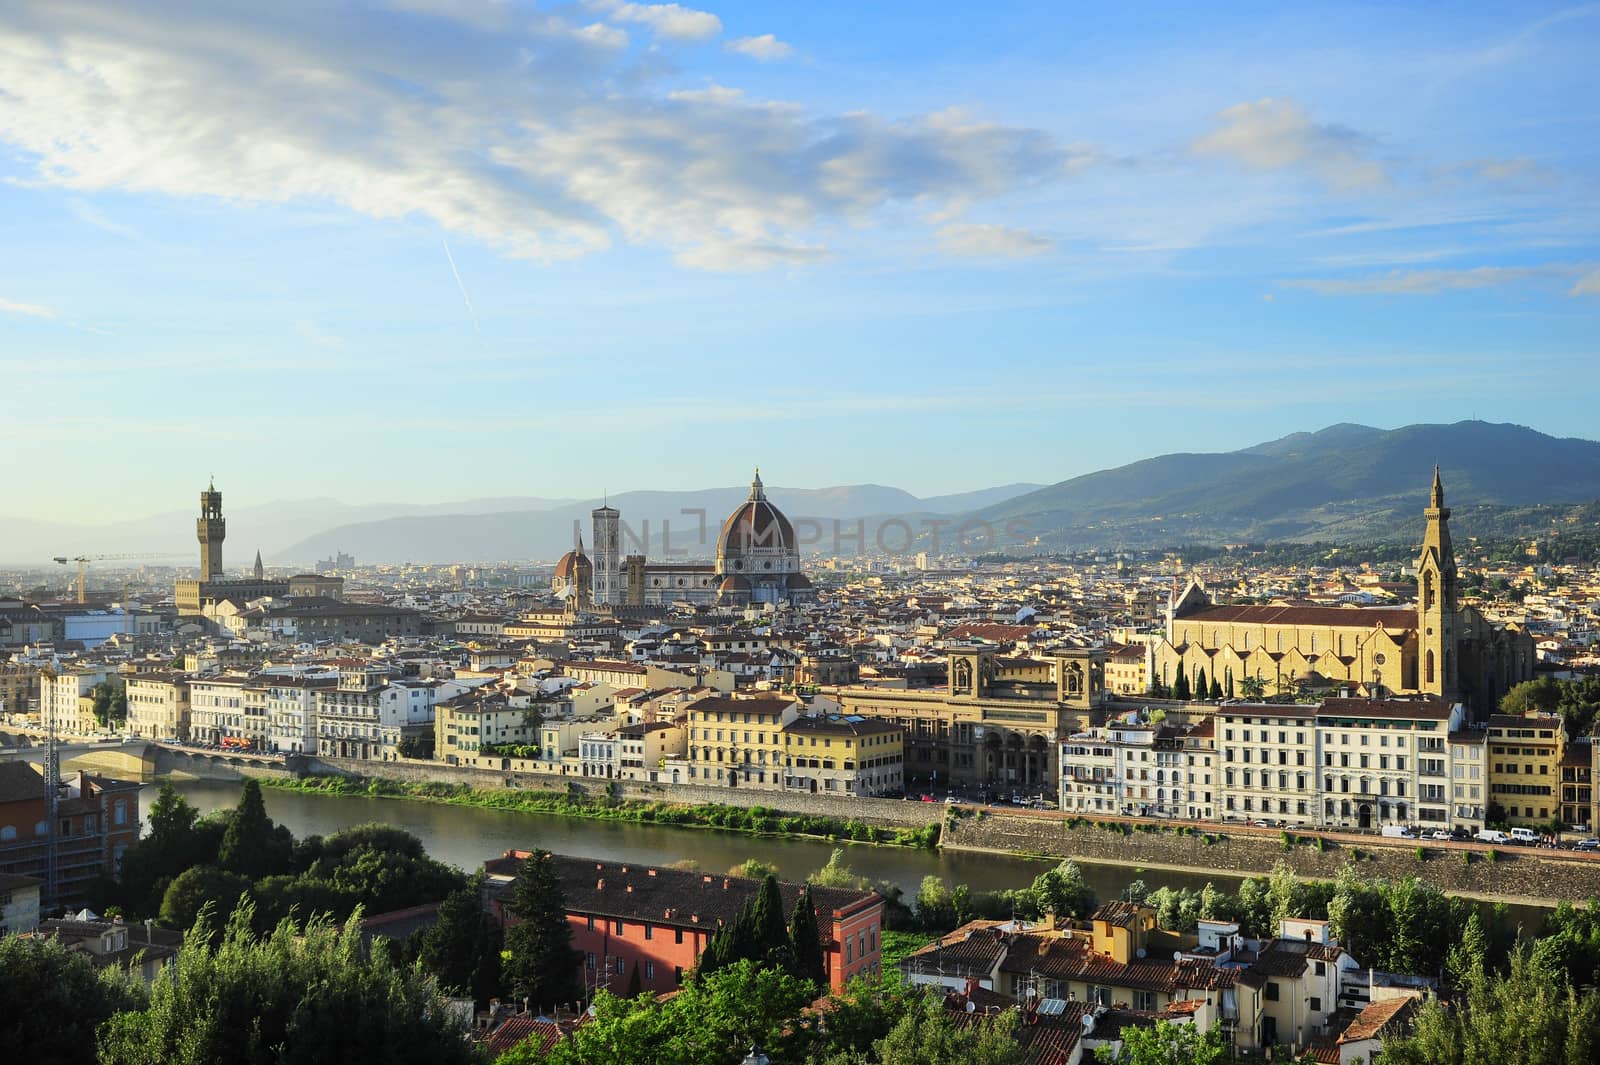 Skyline of Florence with Ponte Vecchio, Palazzo Vecchio and Cathedral of Santa Maria del Fiore (Duomo)